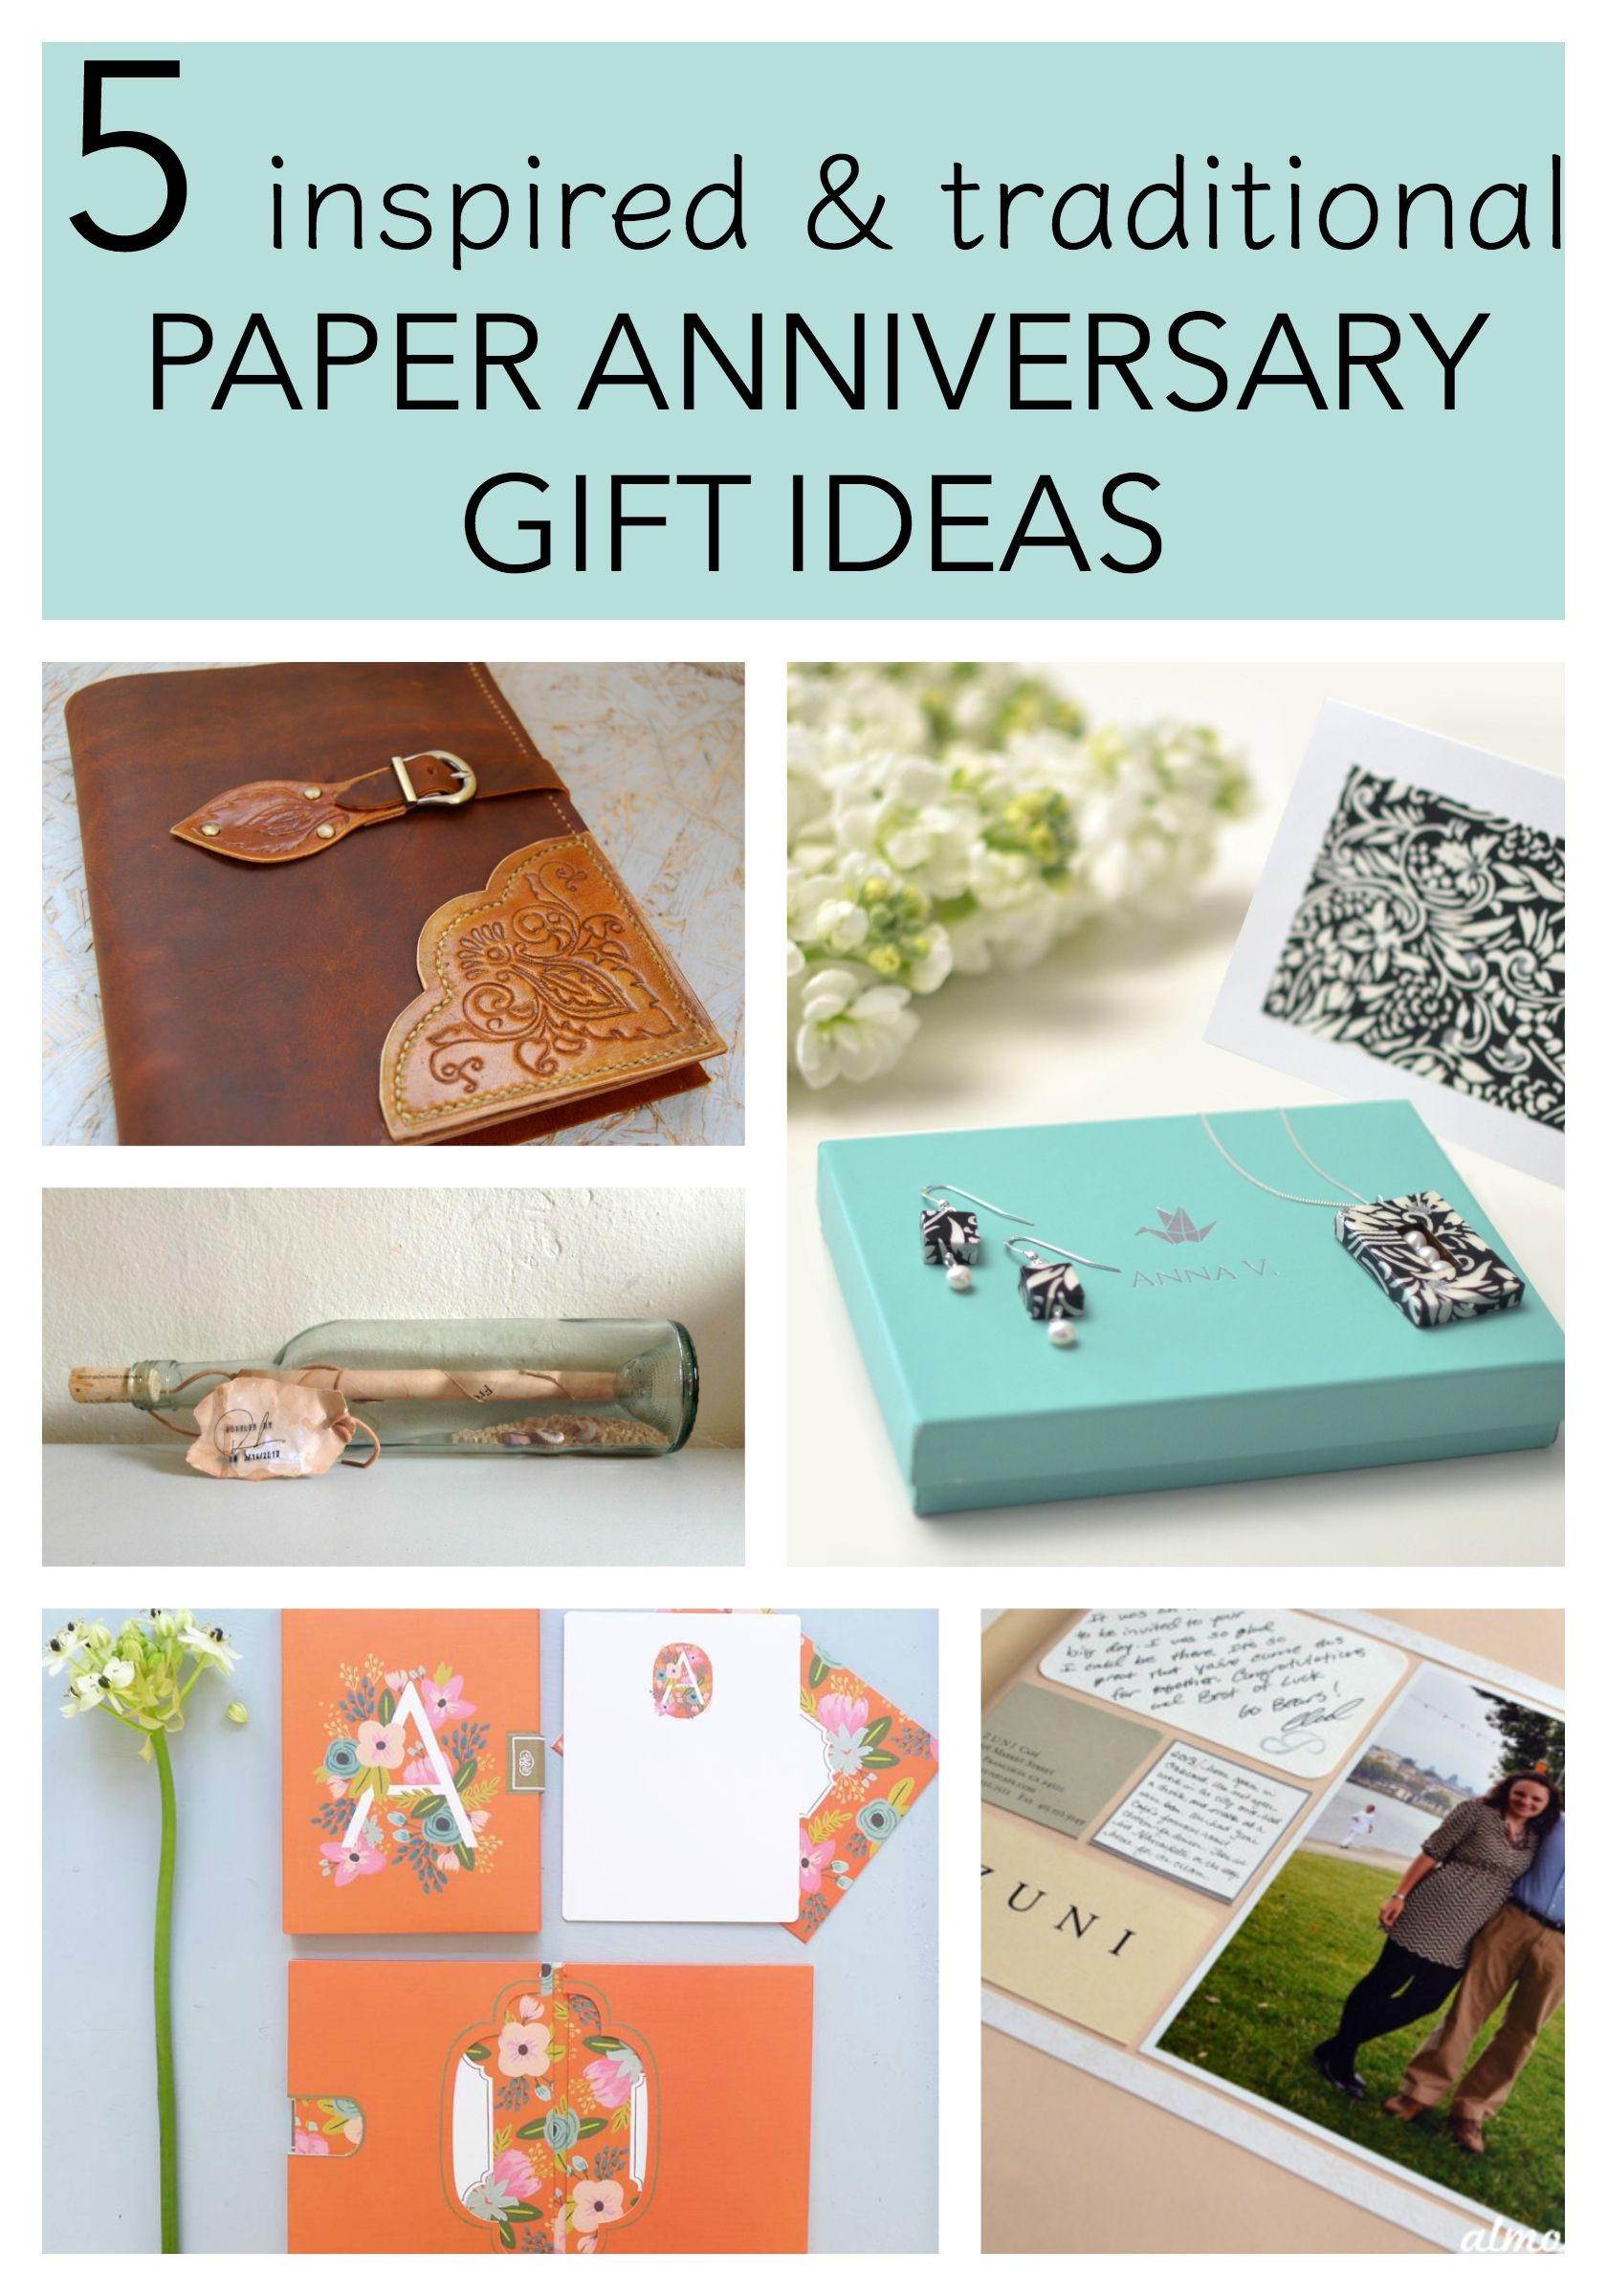 Paper Wedding Anniversary Gift Ideas
 5 Traditional Paper Anniversary Gift Ideas for Her